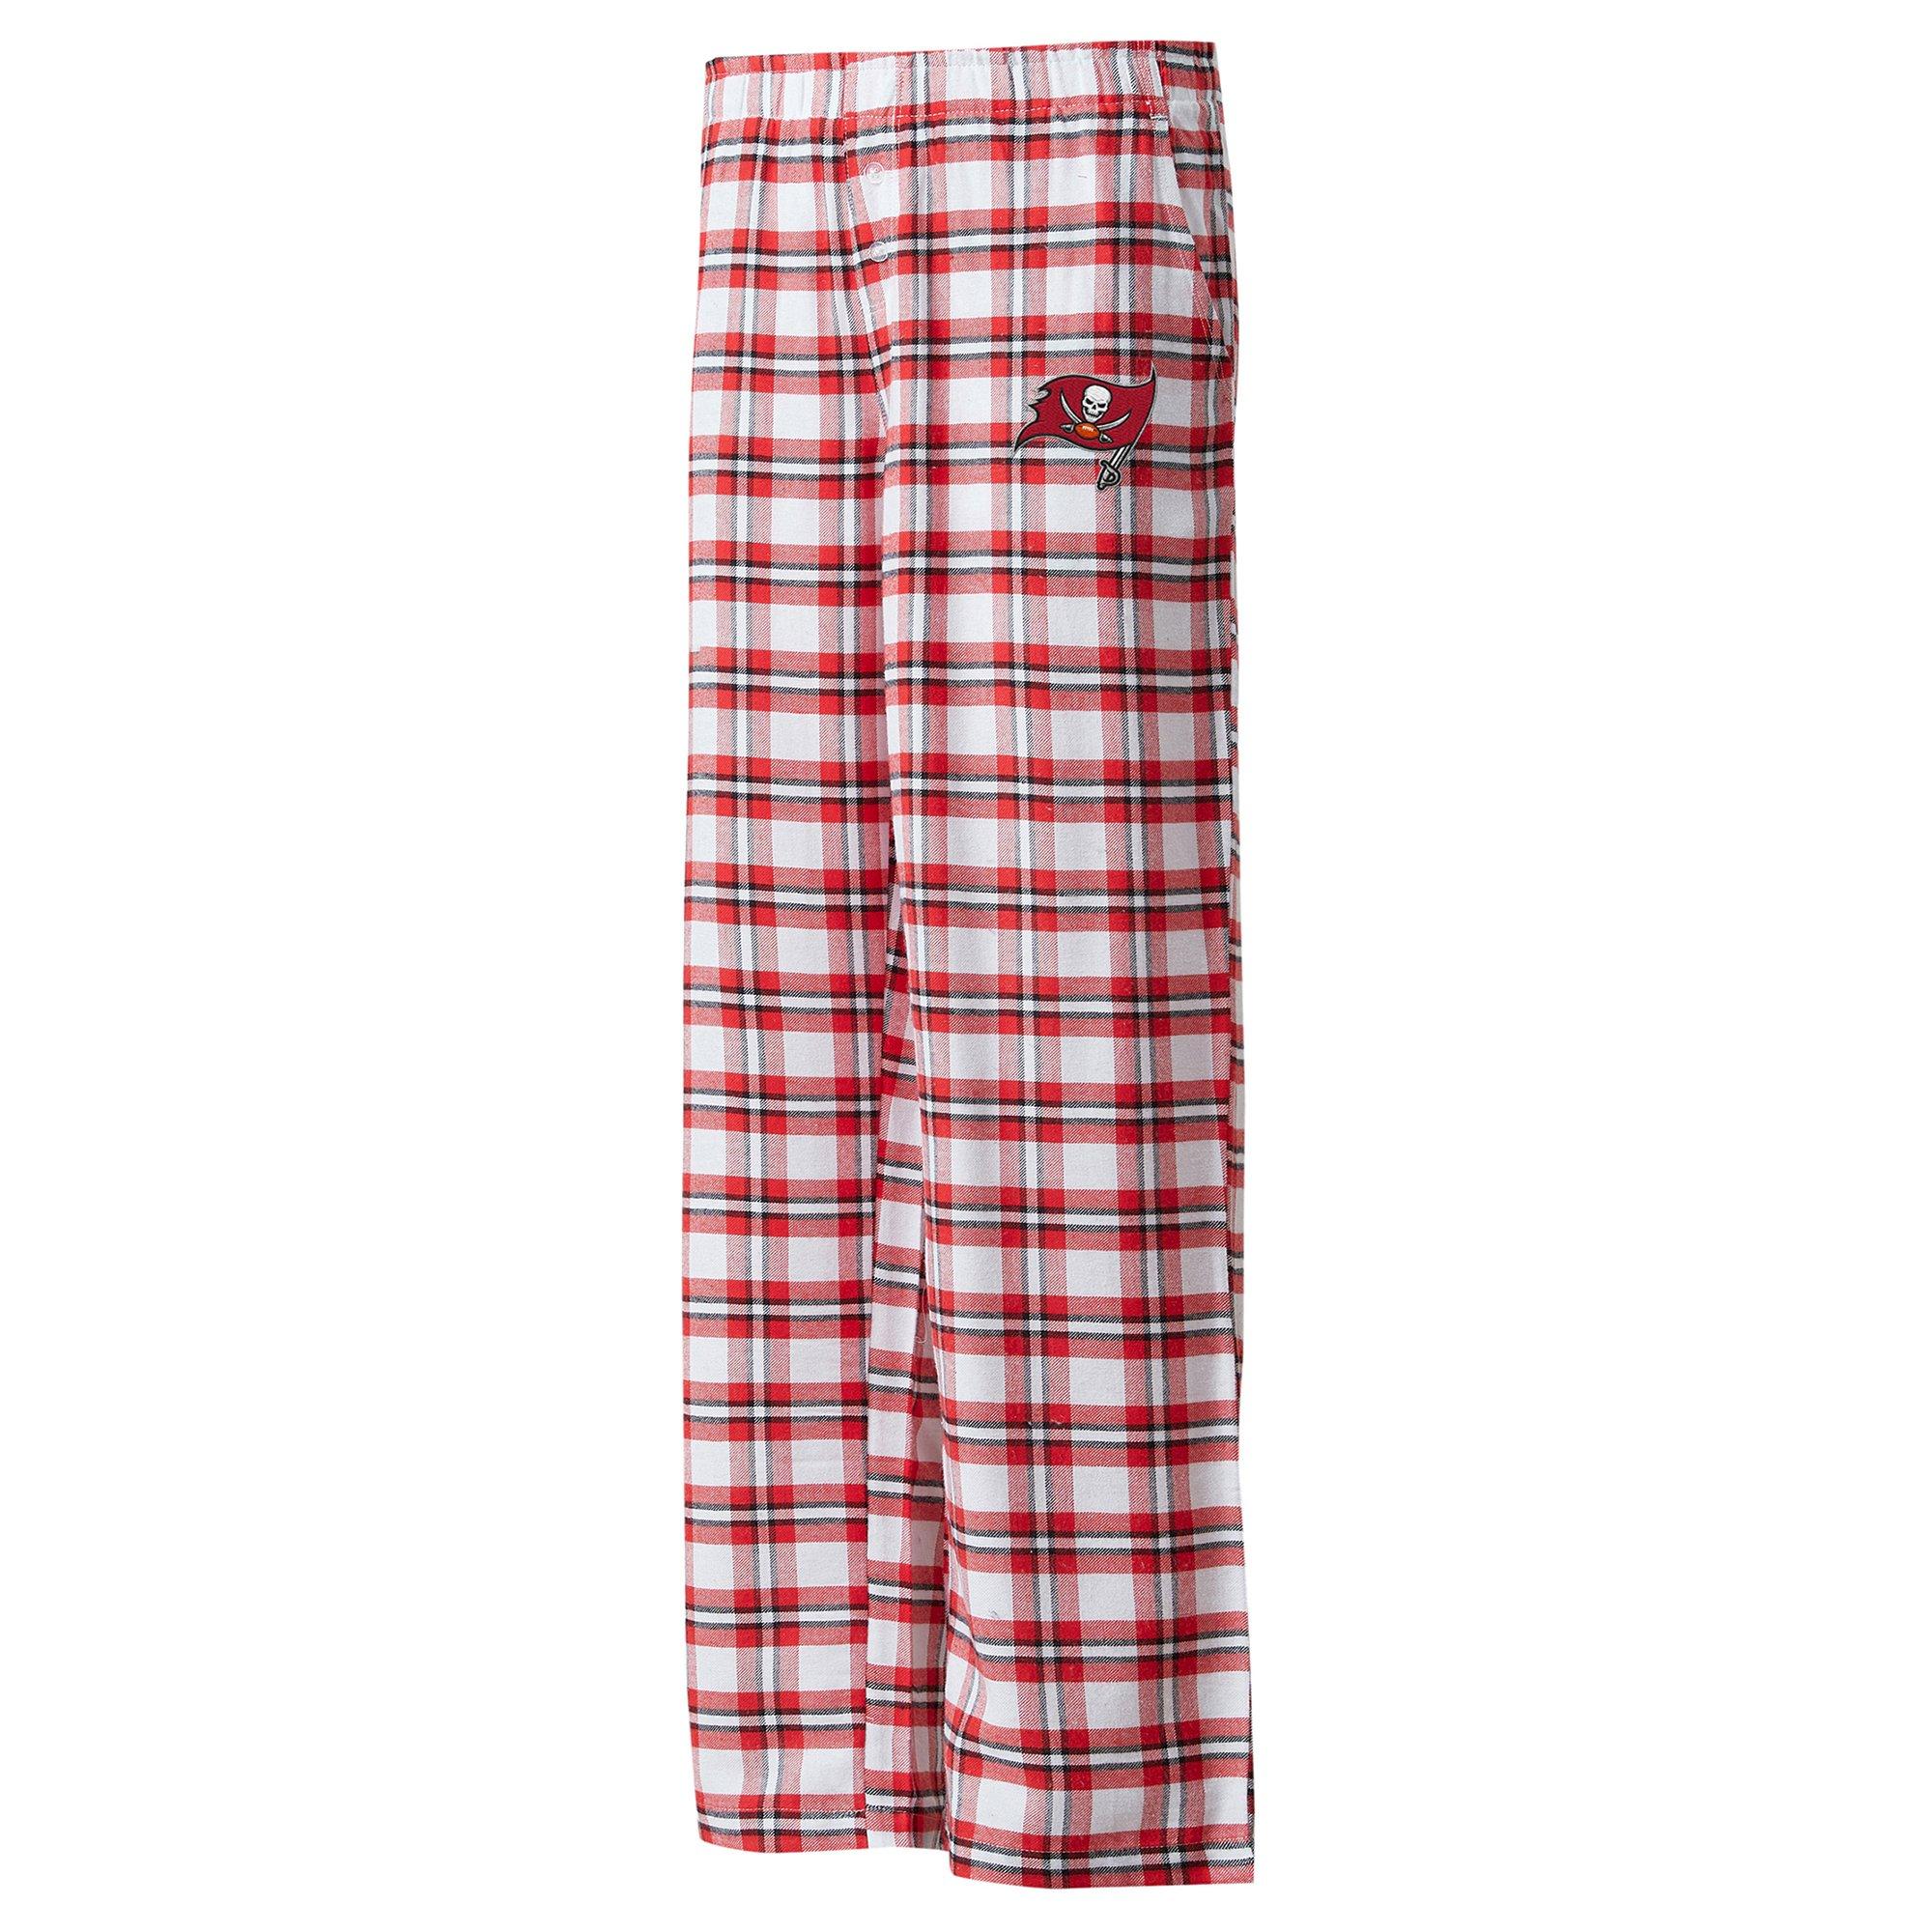 Womens Tampa Bay Buccaneers Plaid Pajama Pants